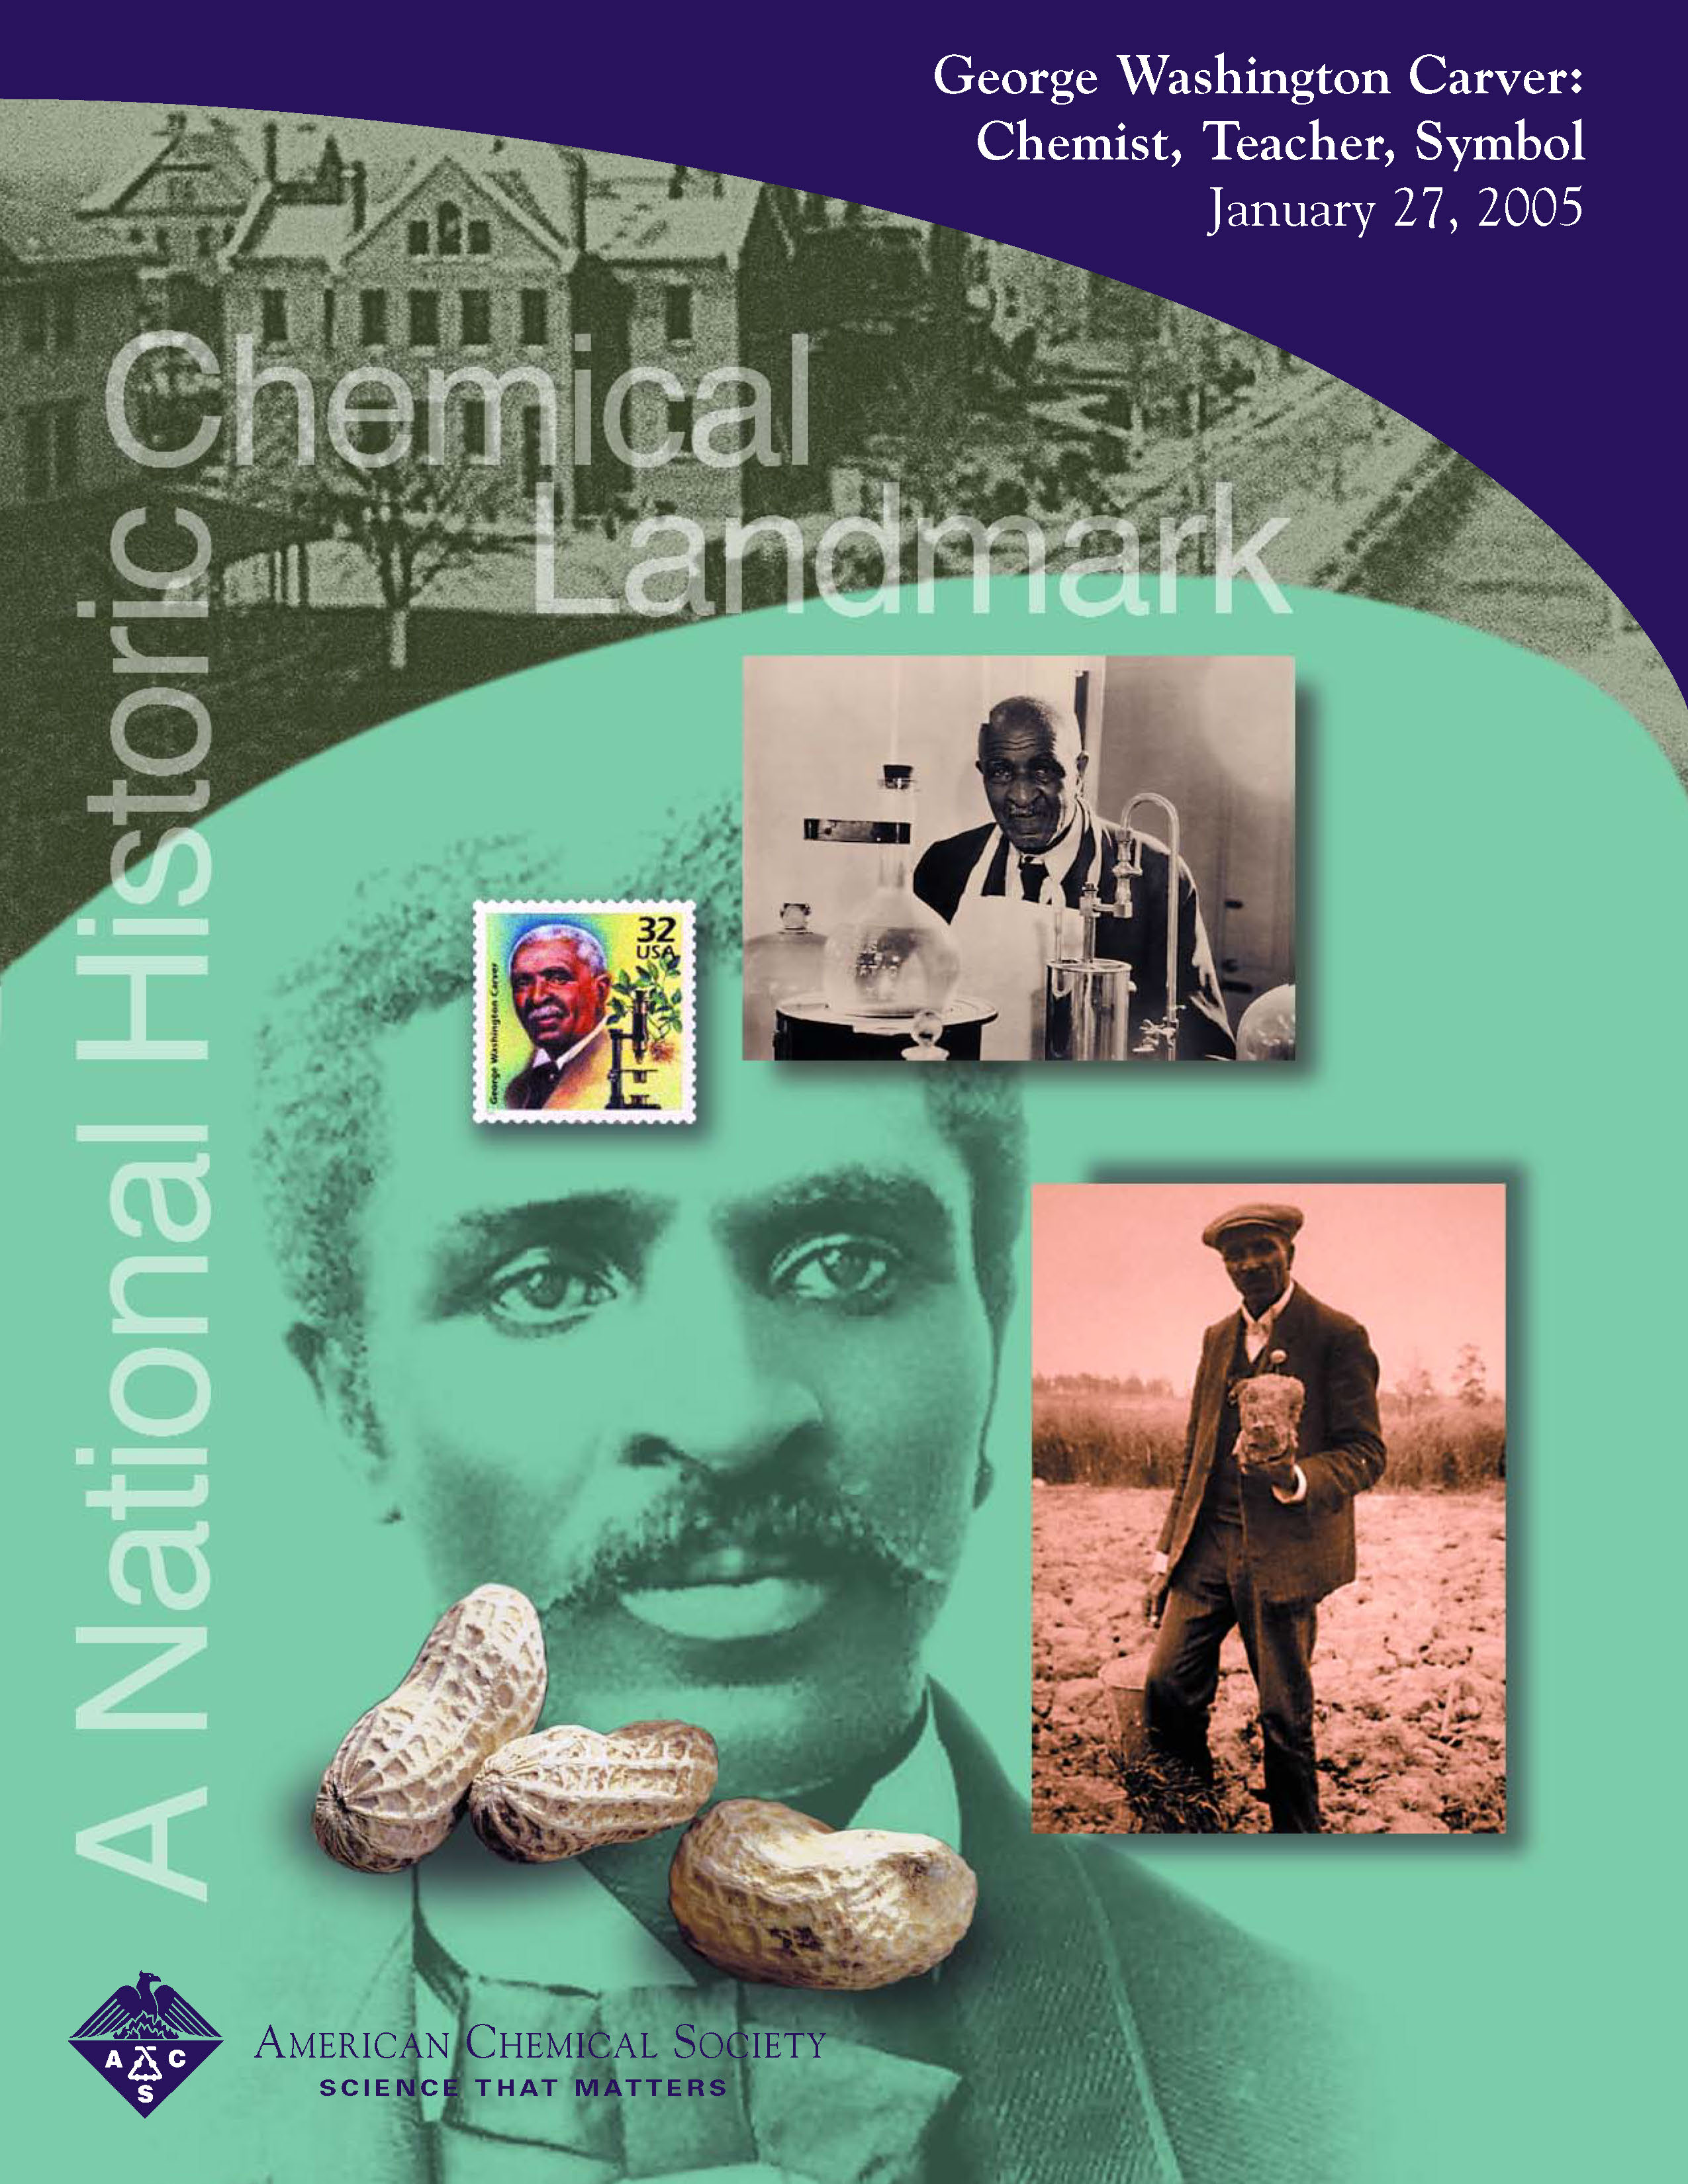 “George Washington Carver: Chemist, Teacher, Symbol” commemorative booklet